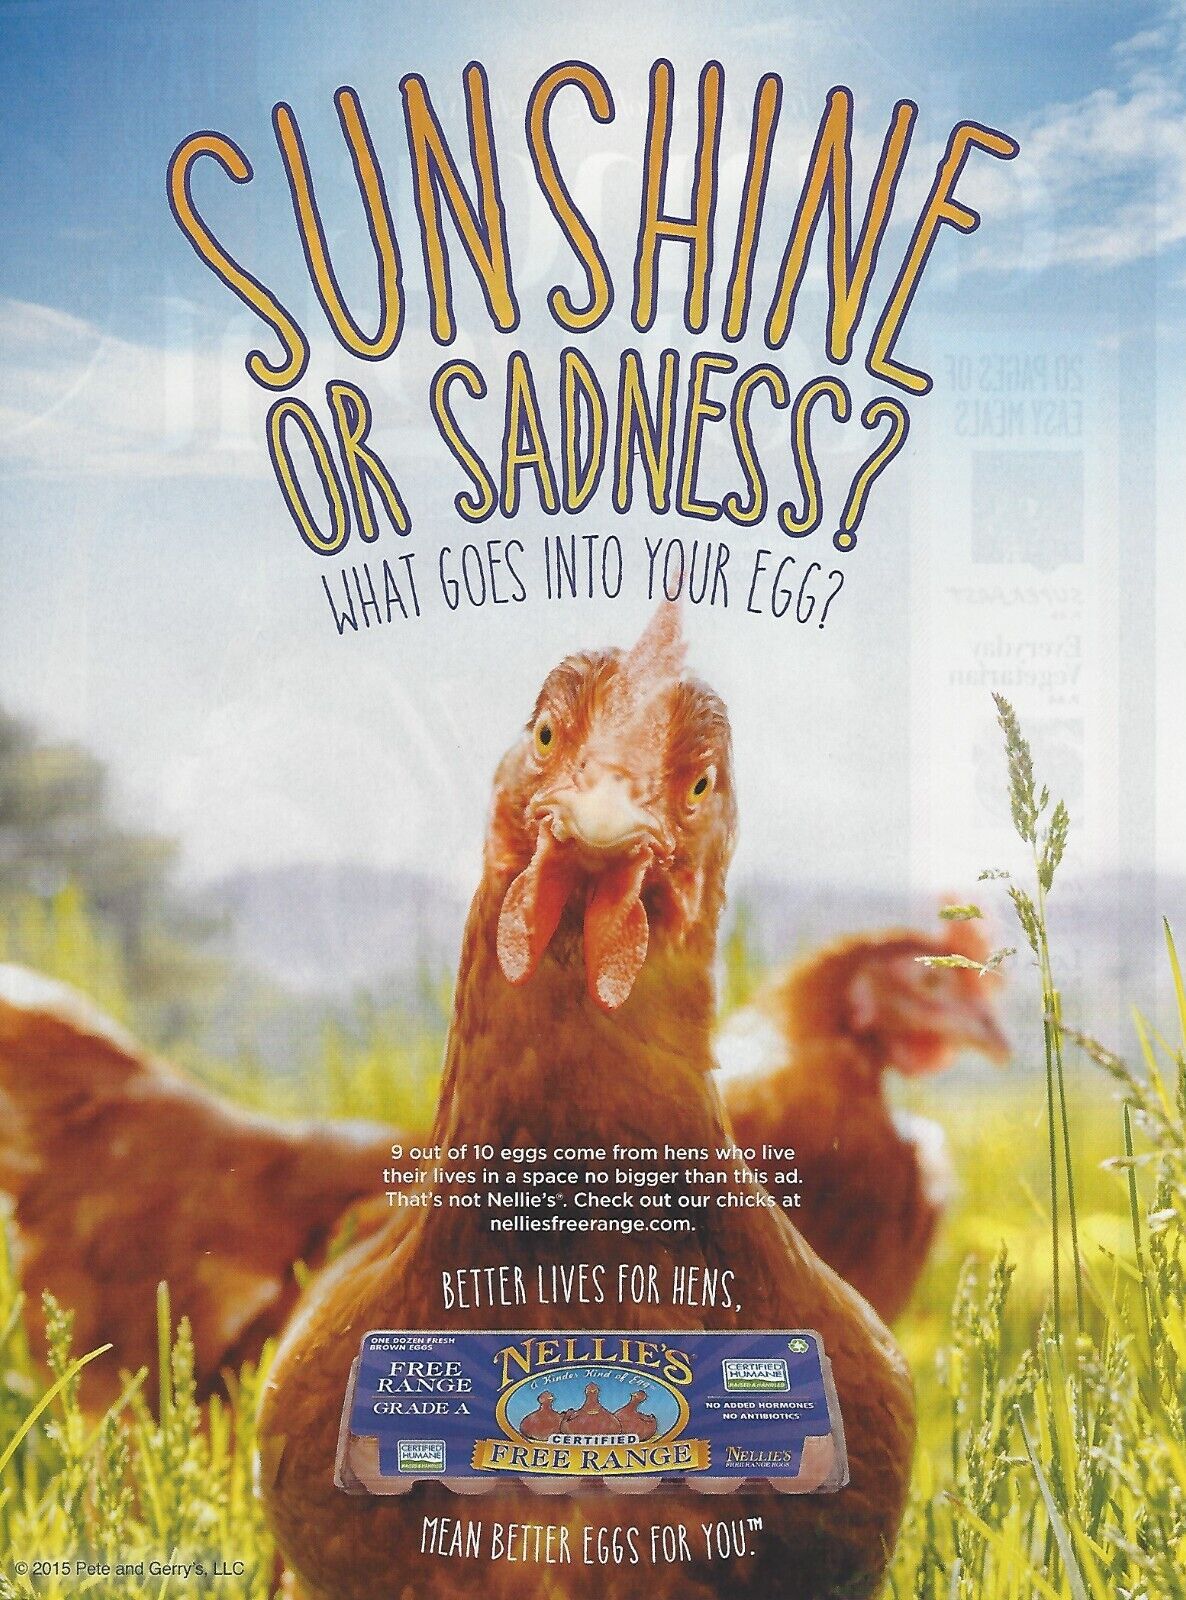 2015 Pete & Gerry's Nellie's Free Range Eggs print ad Food advertisement